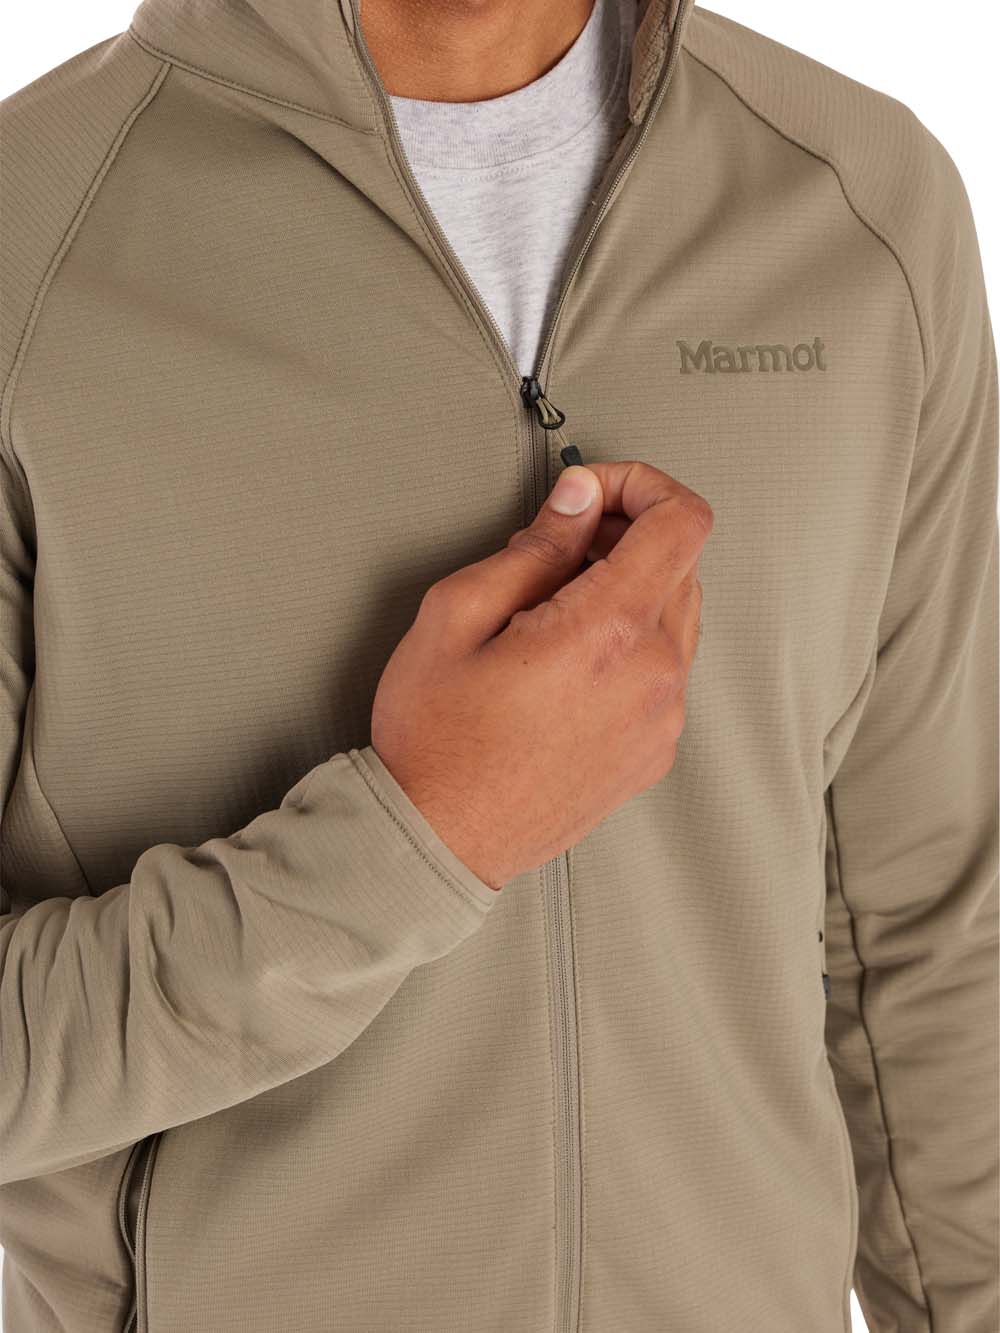 Marmot Men's Stretch Fleece Jacket